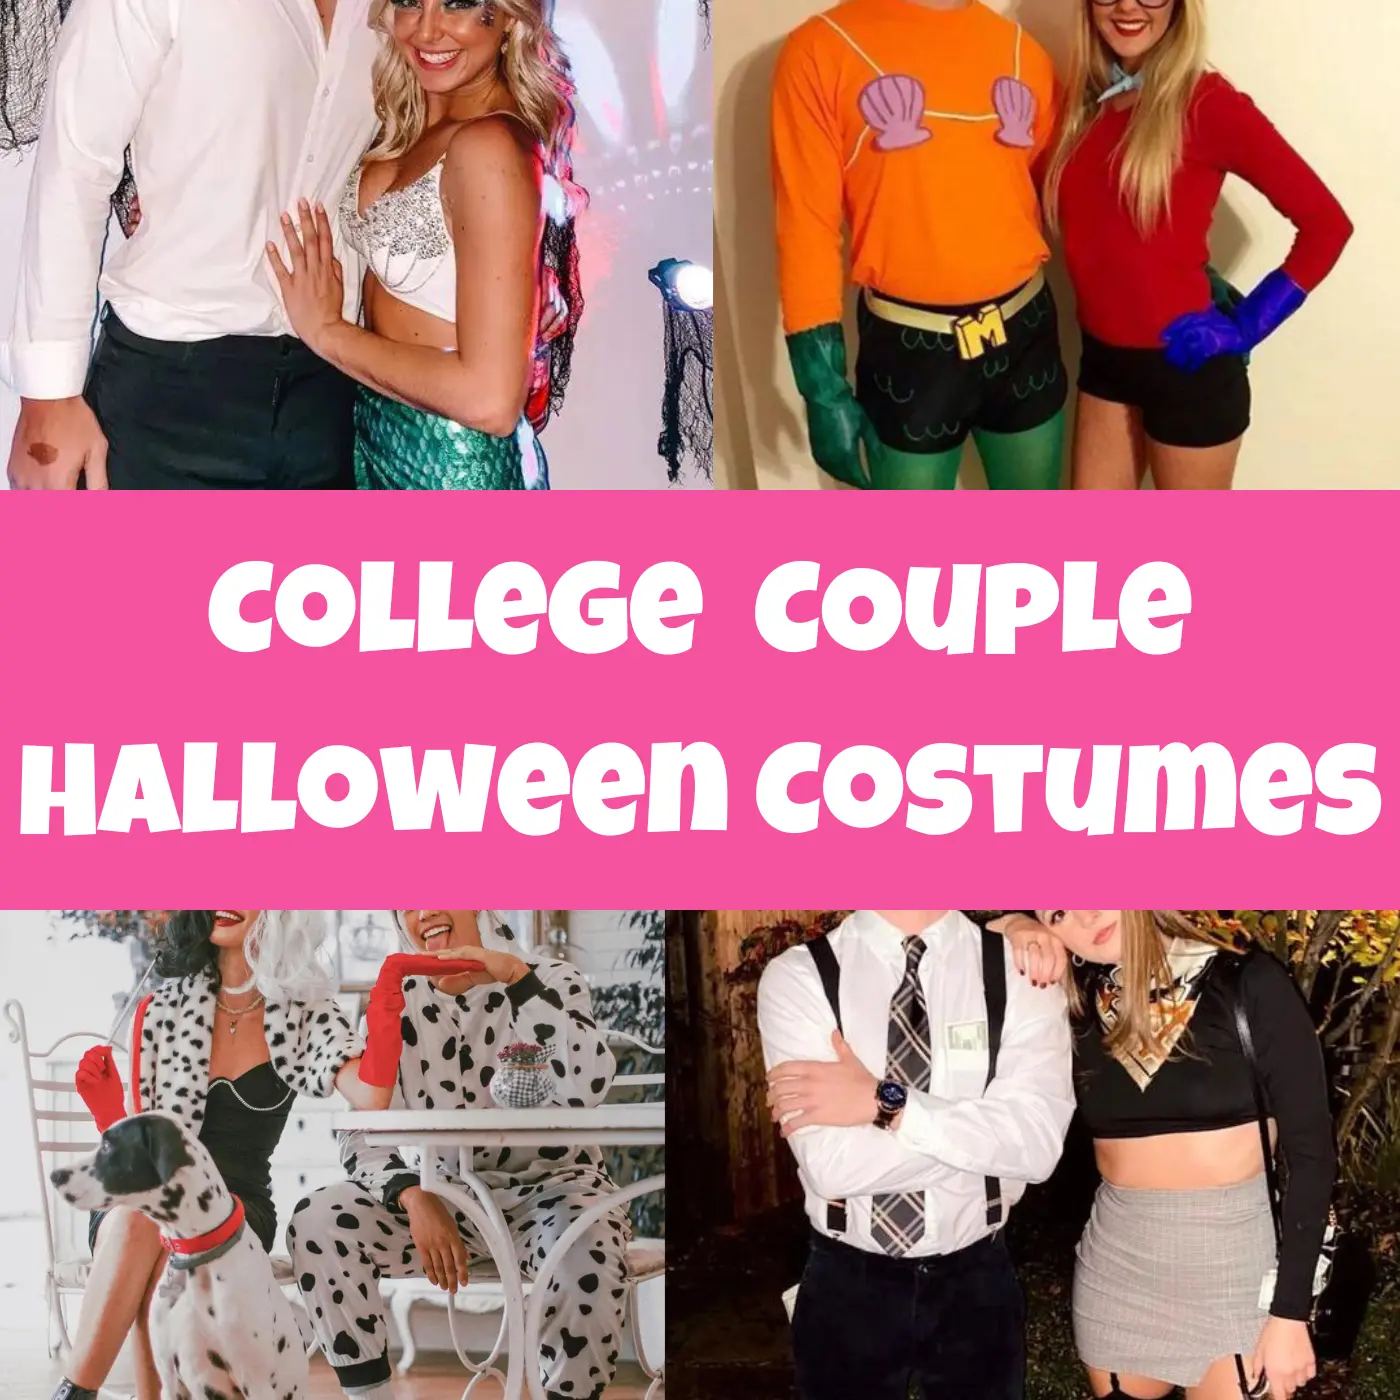 College couple Halloween costumes